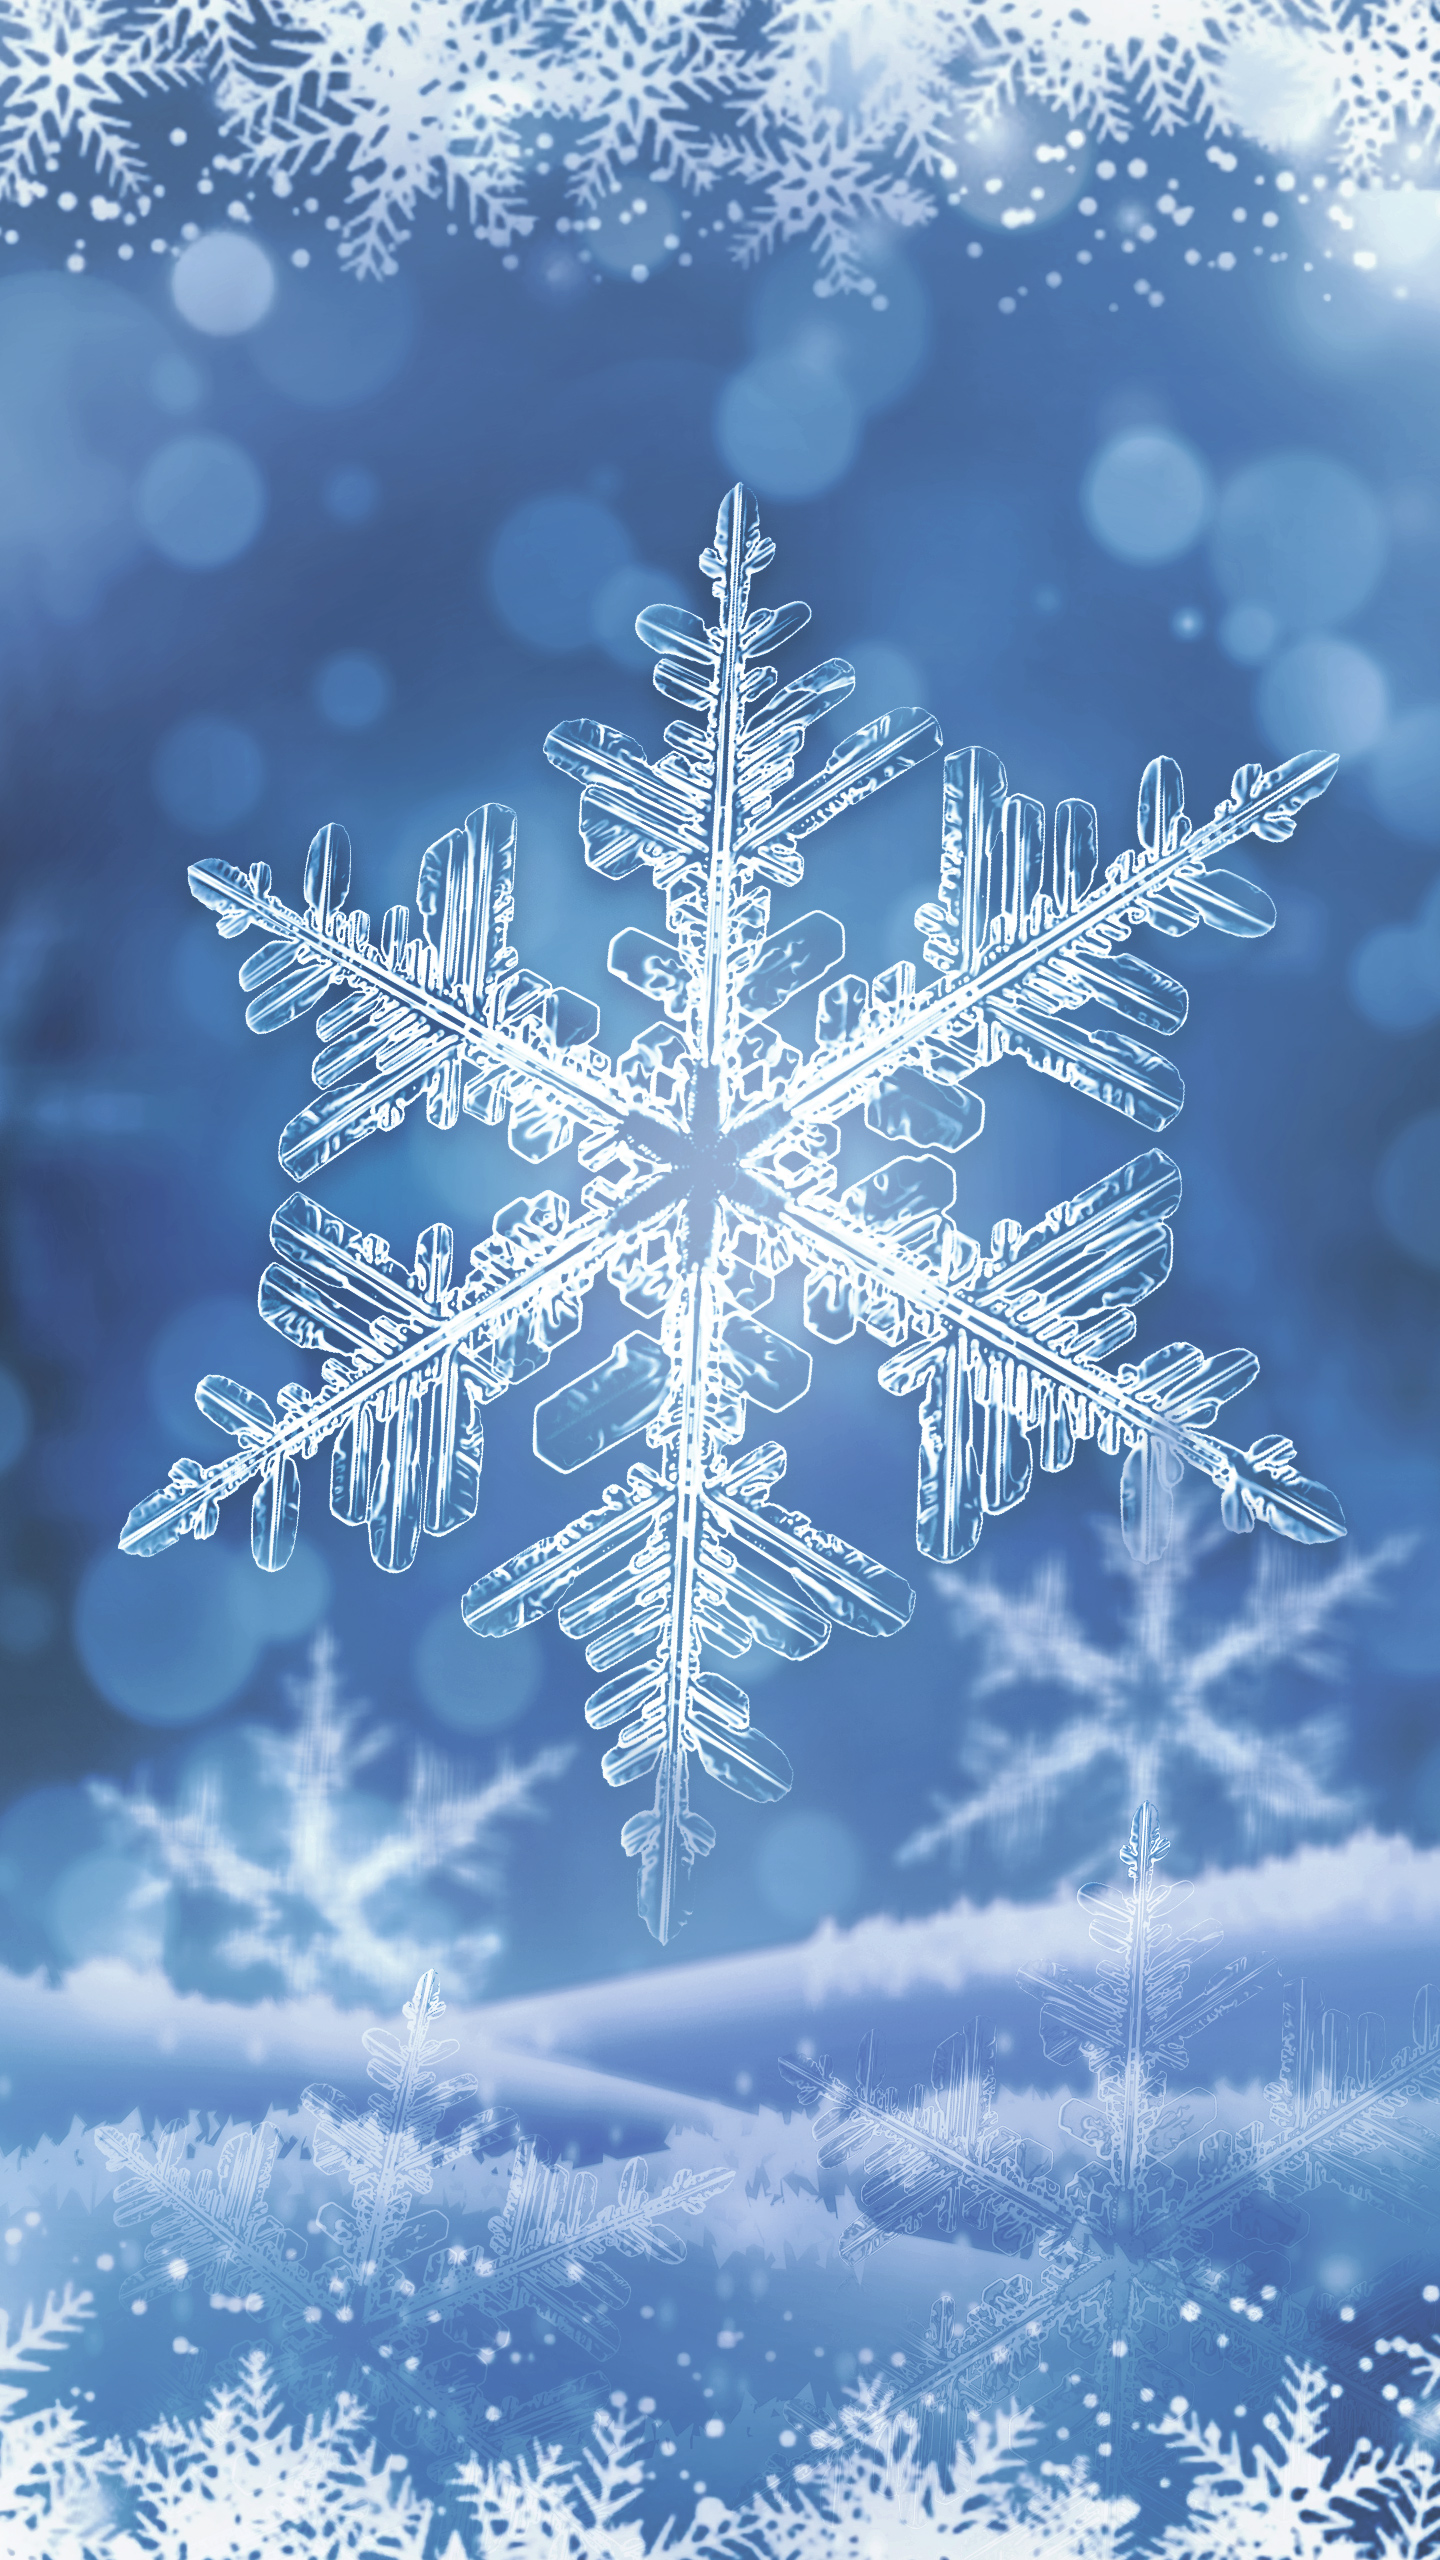 Winter Snowflake Smartphone Wallpaper Gallery Yopriceville